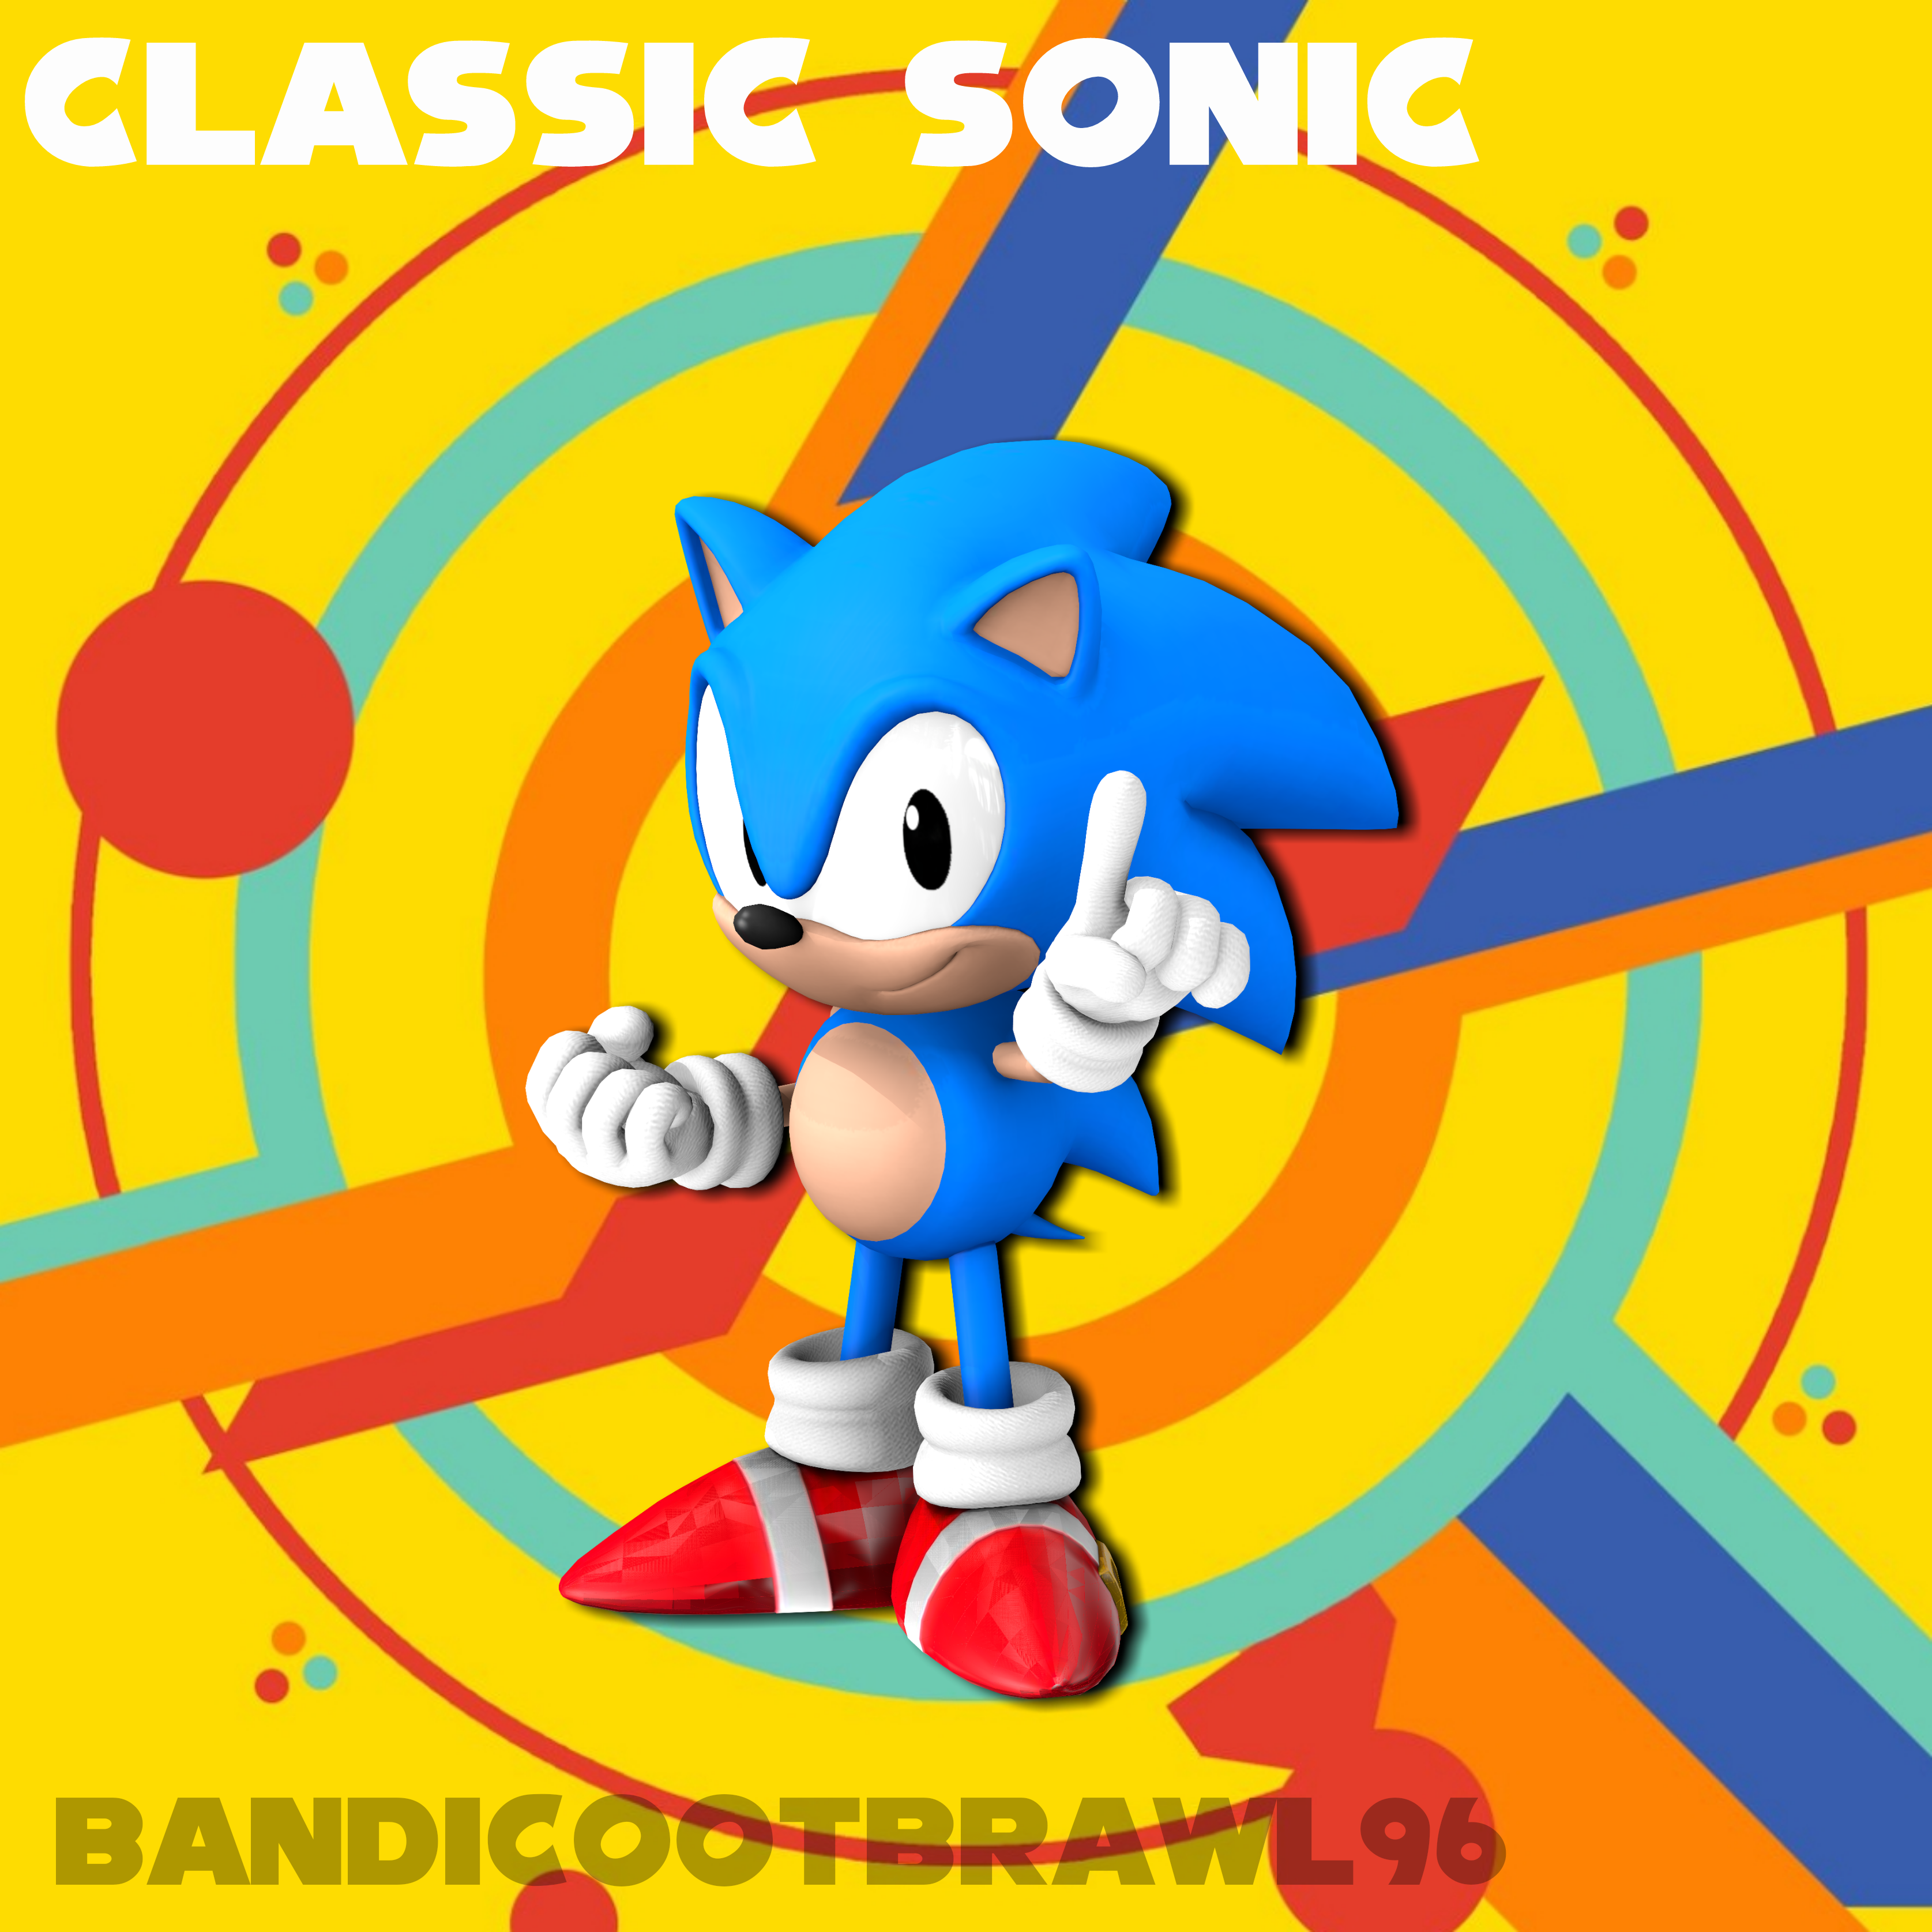 Classic Sonic  Mania Render by bandicootbrawl96 on DeviantArt